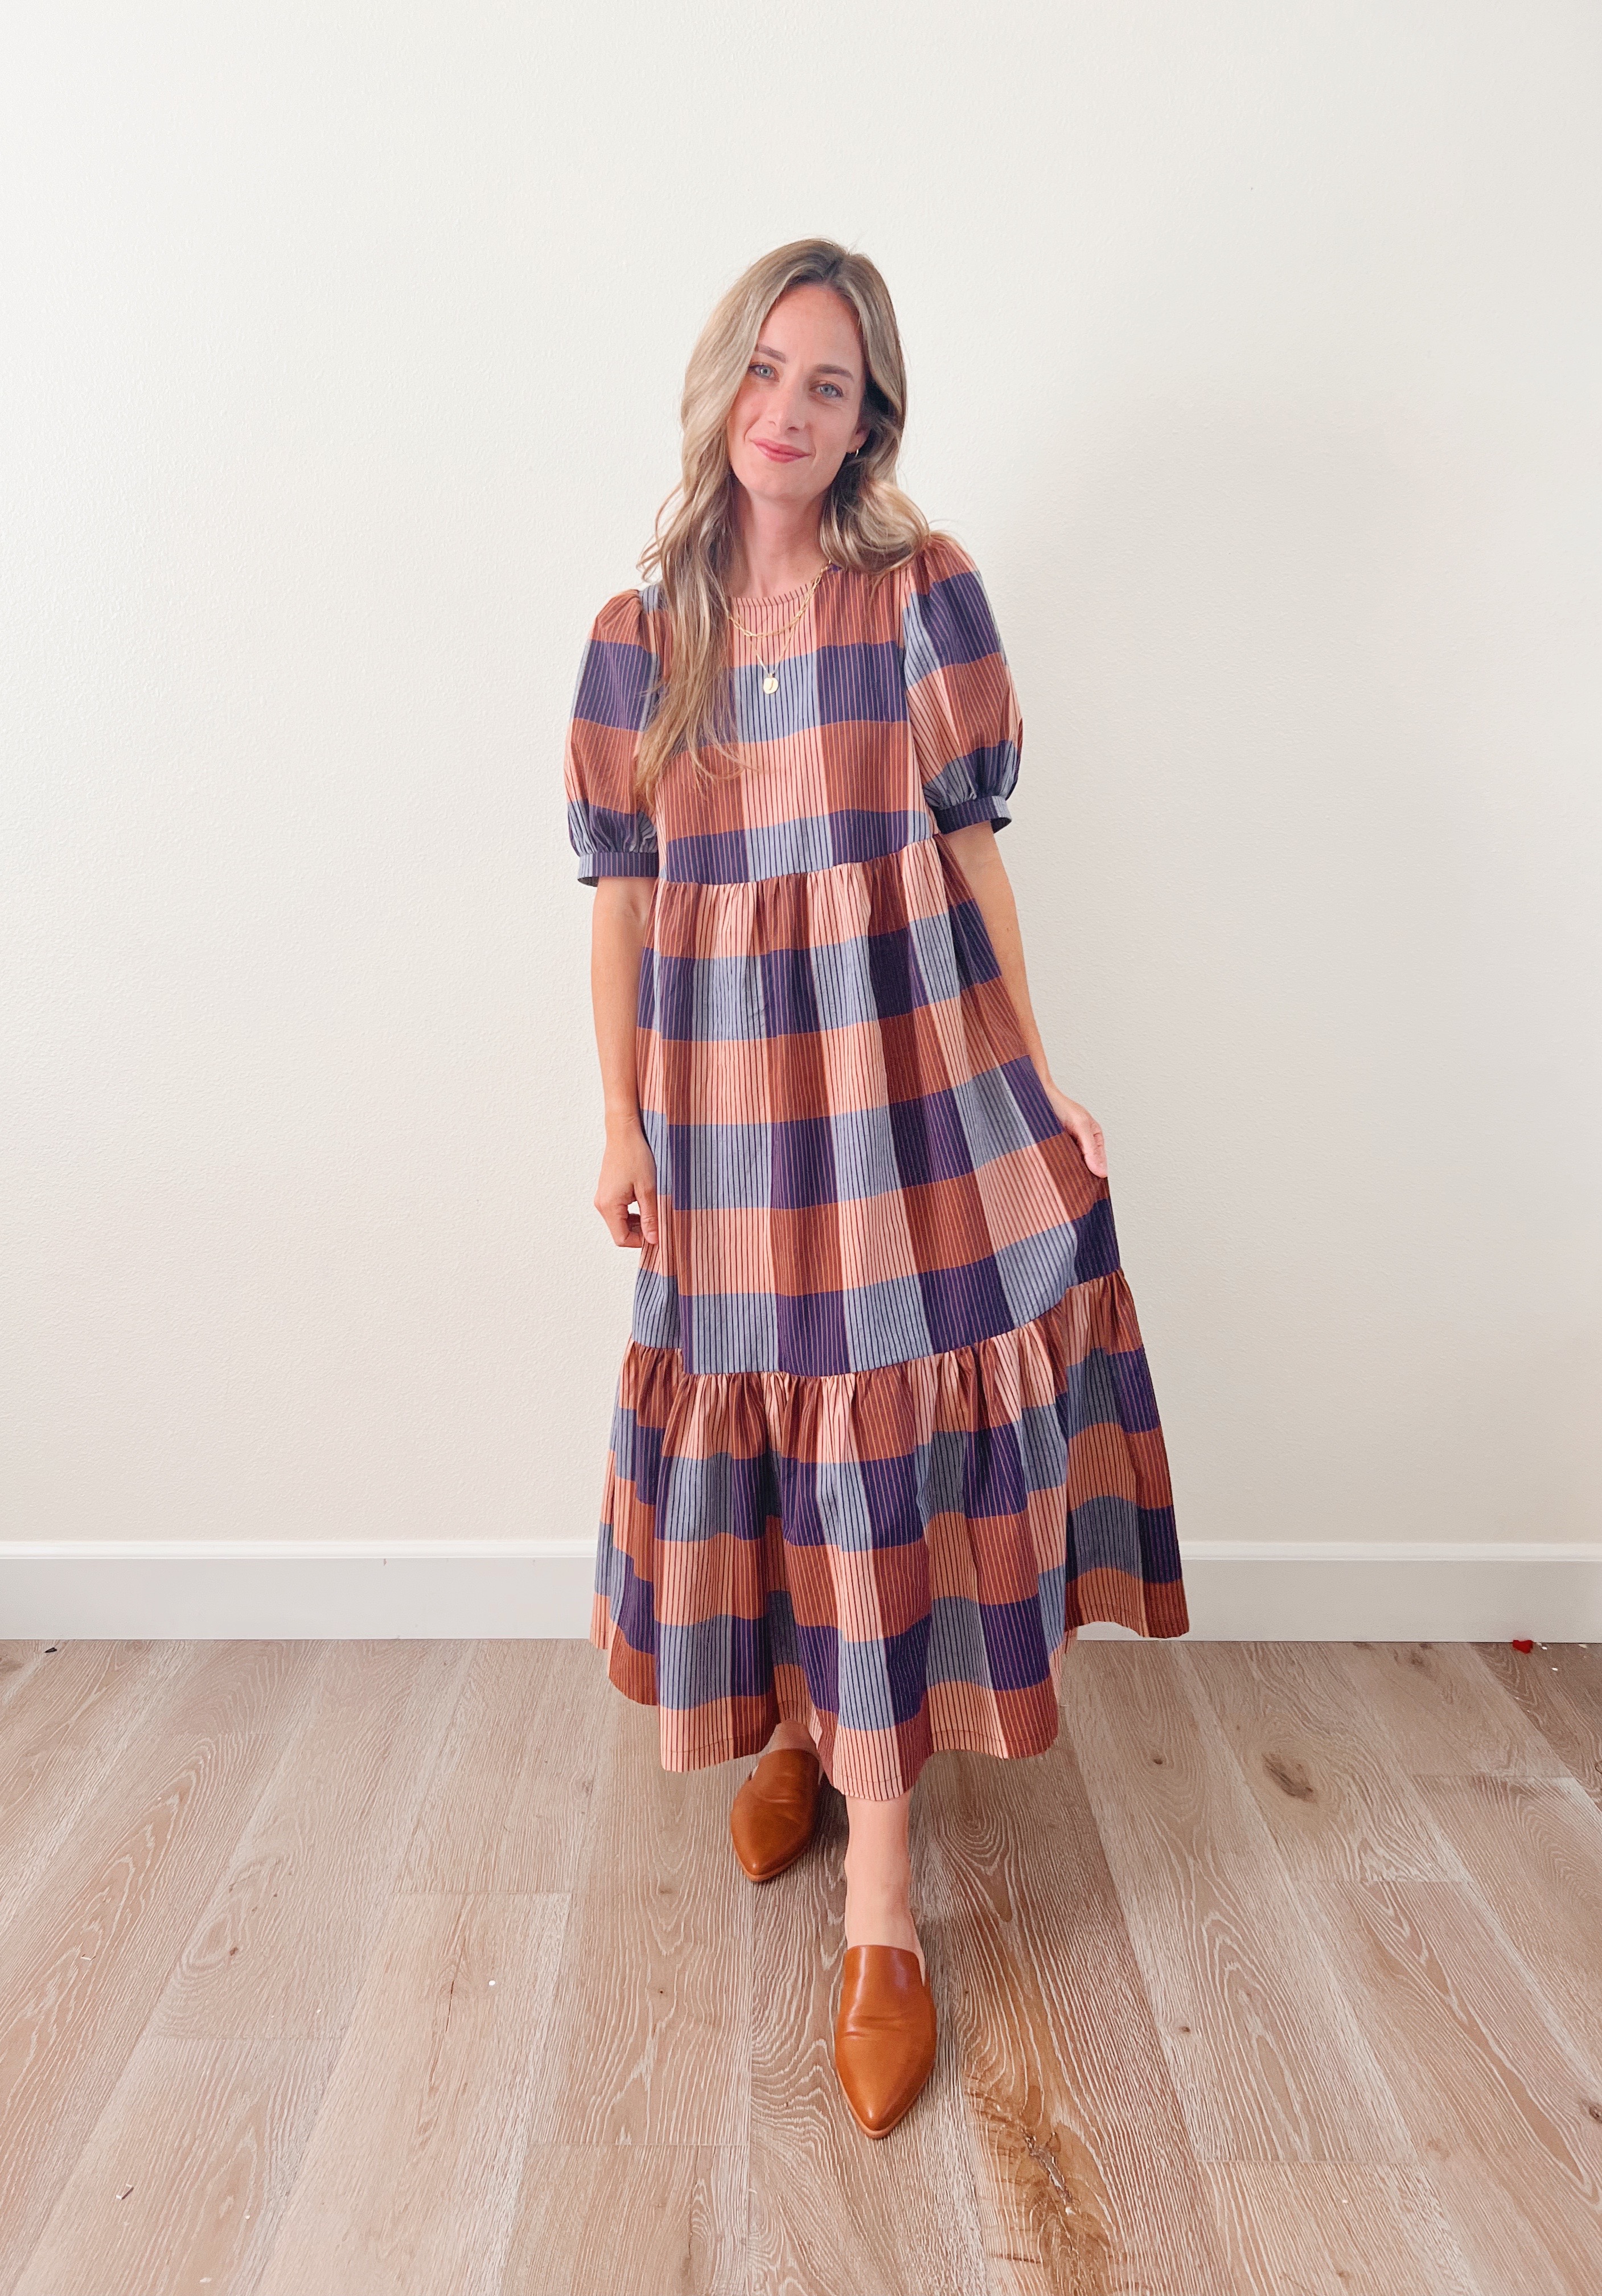 Blog — New Dress A Day